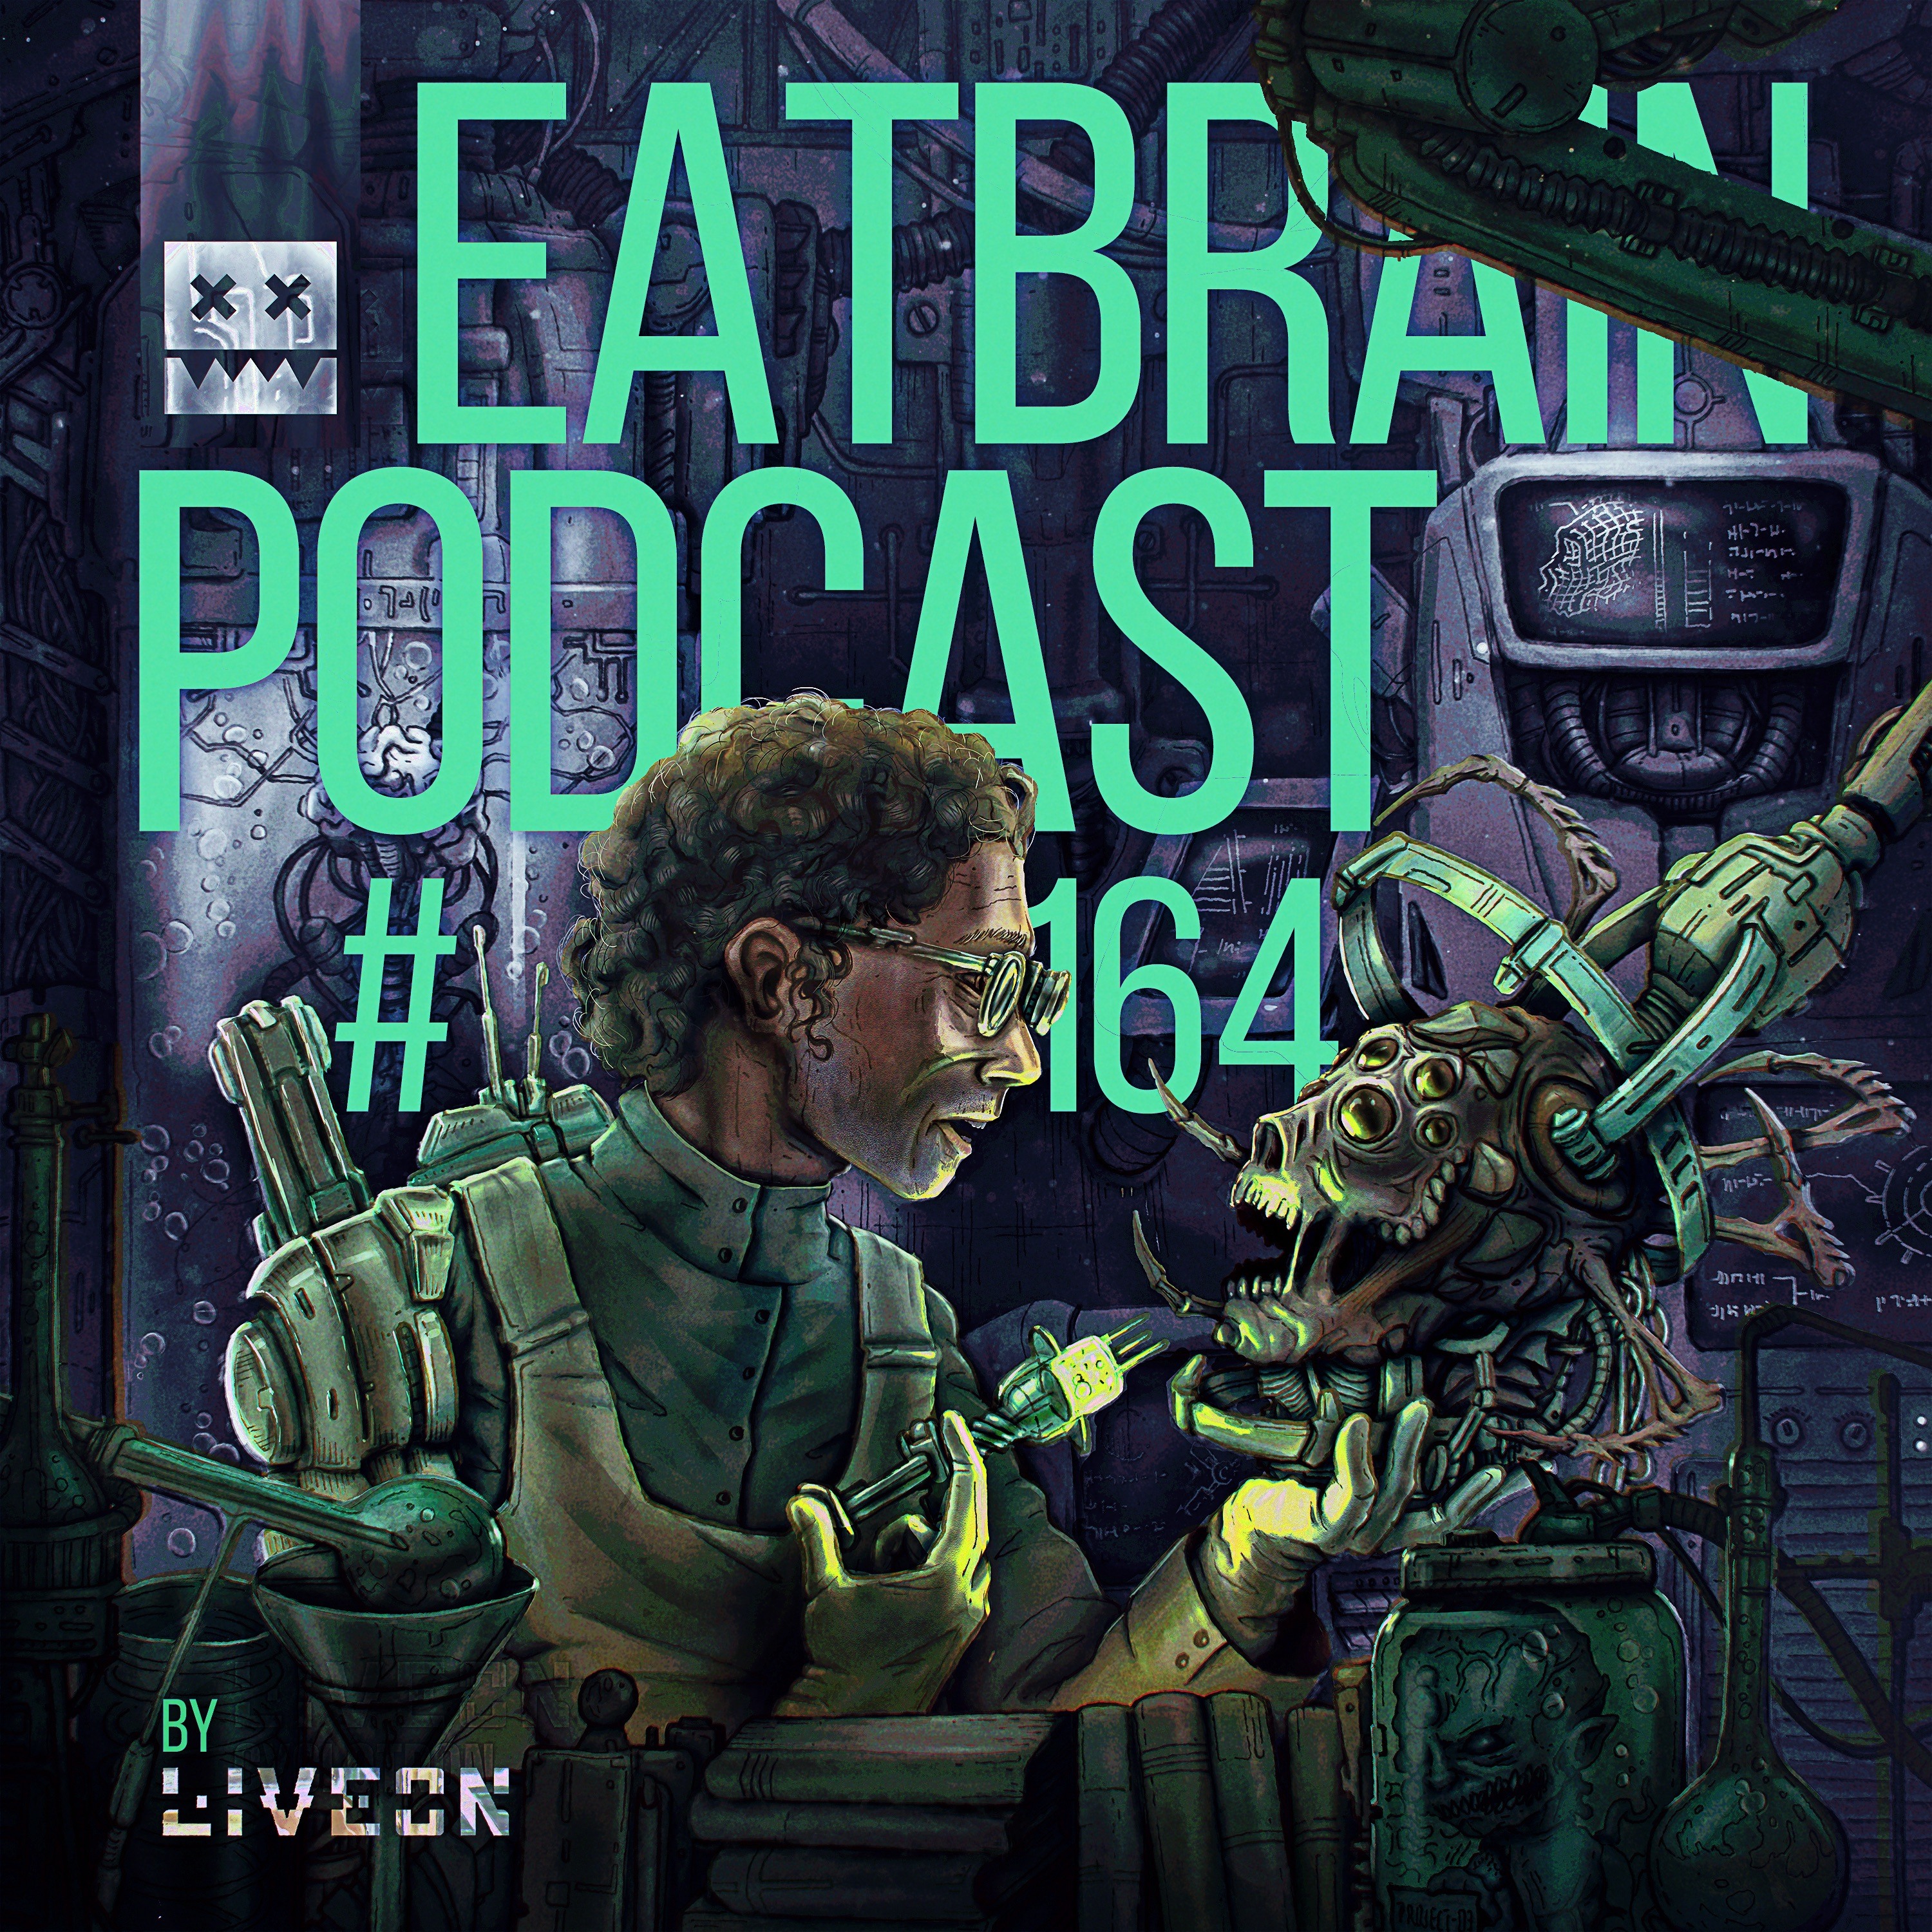 EATBRAIN Podcast 164 by Liveon